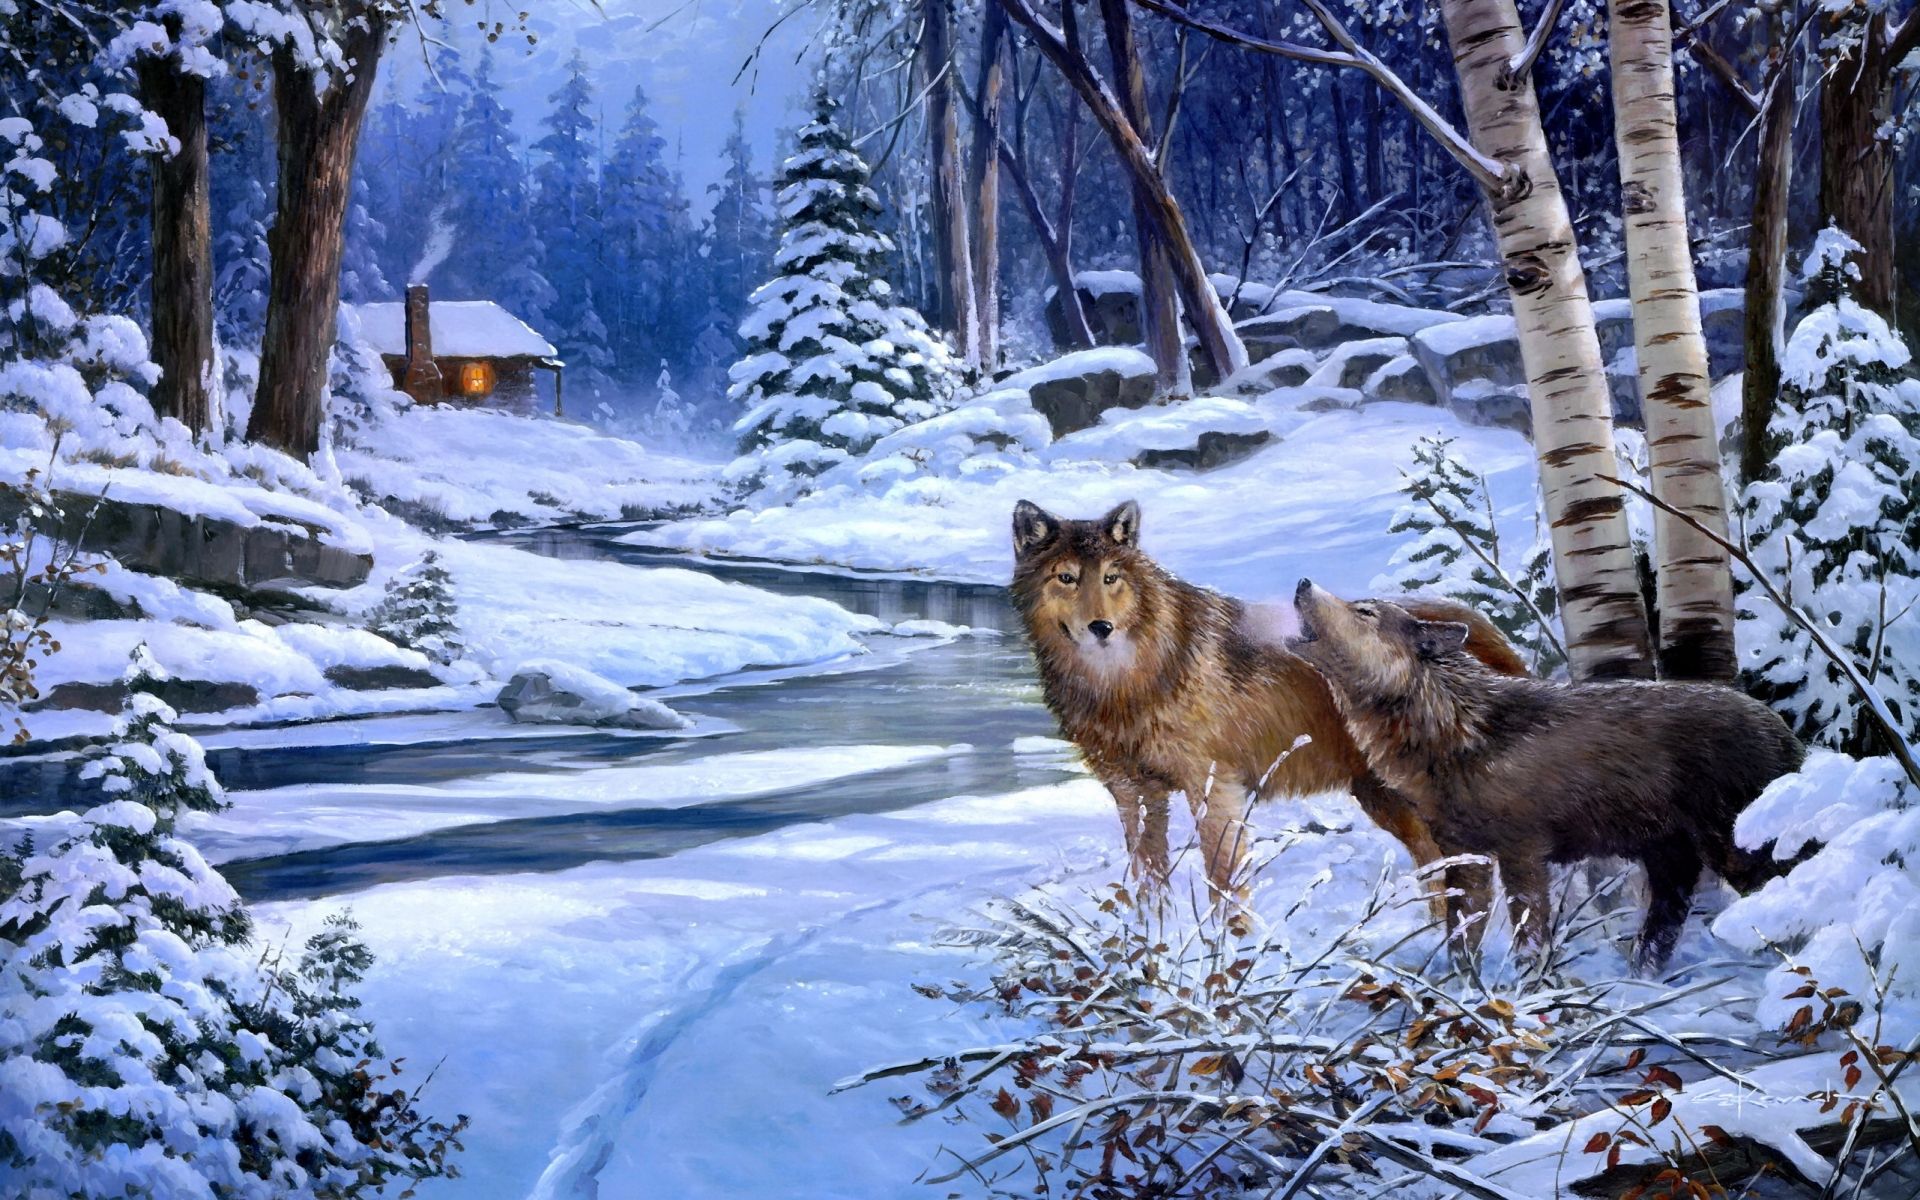 Wolves wolf art paintings landscapes .wallpaperup.com